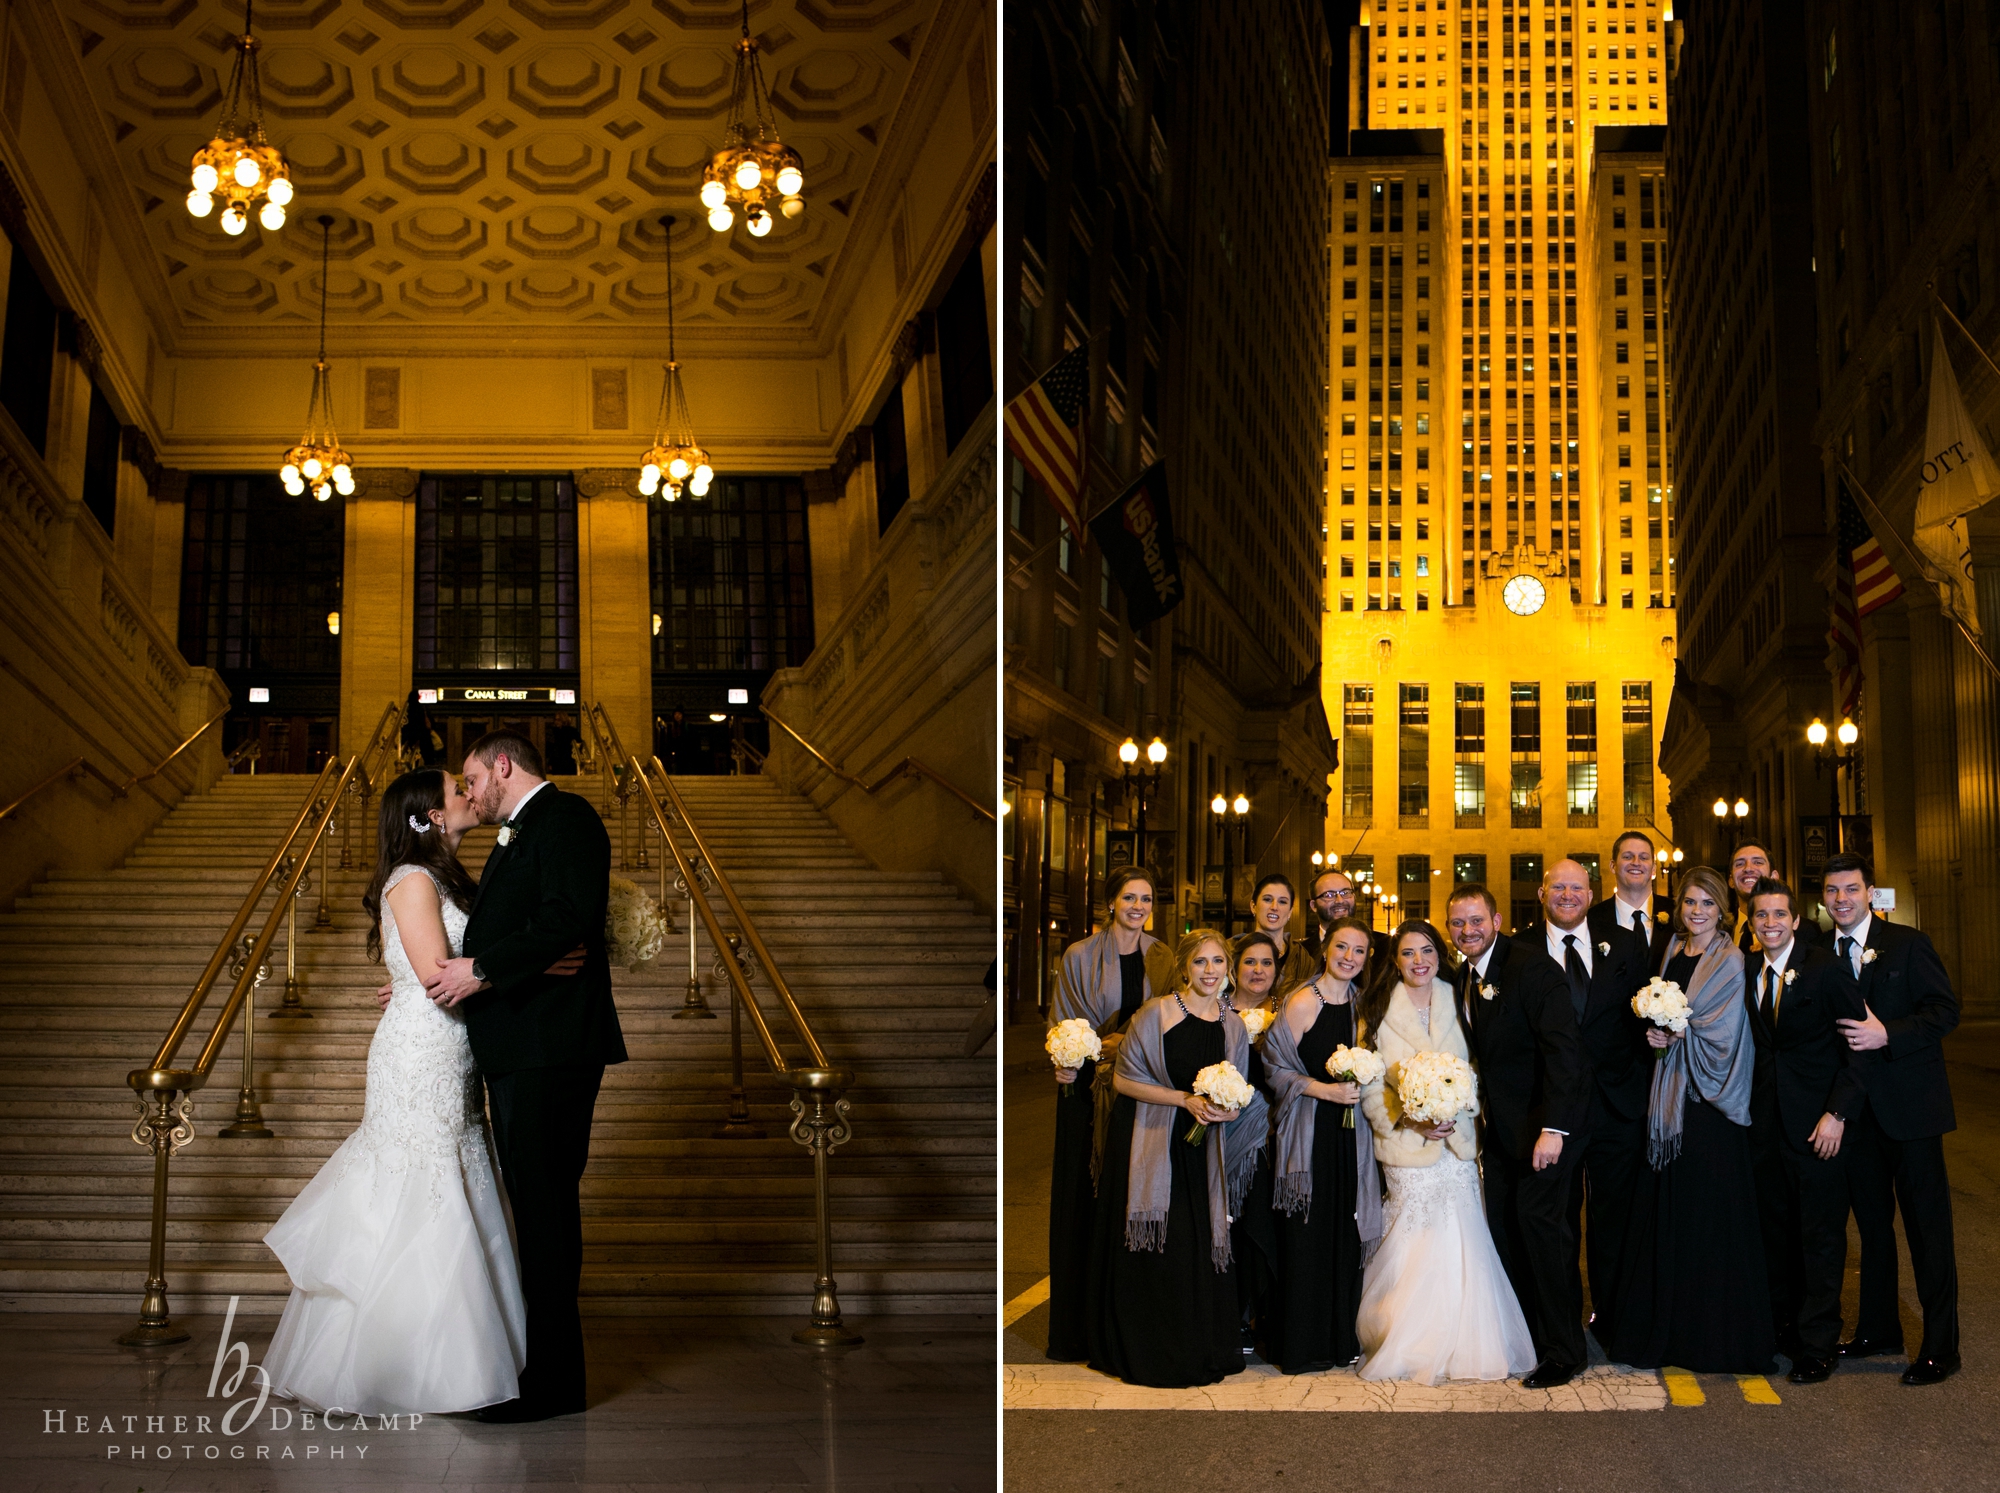 Union Station Wedding photos